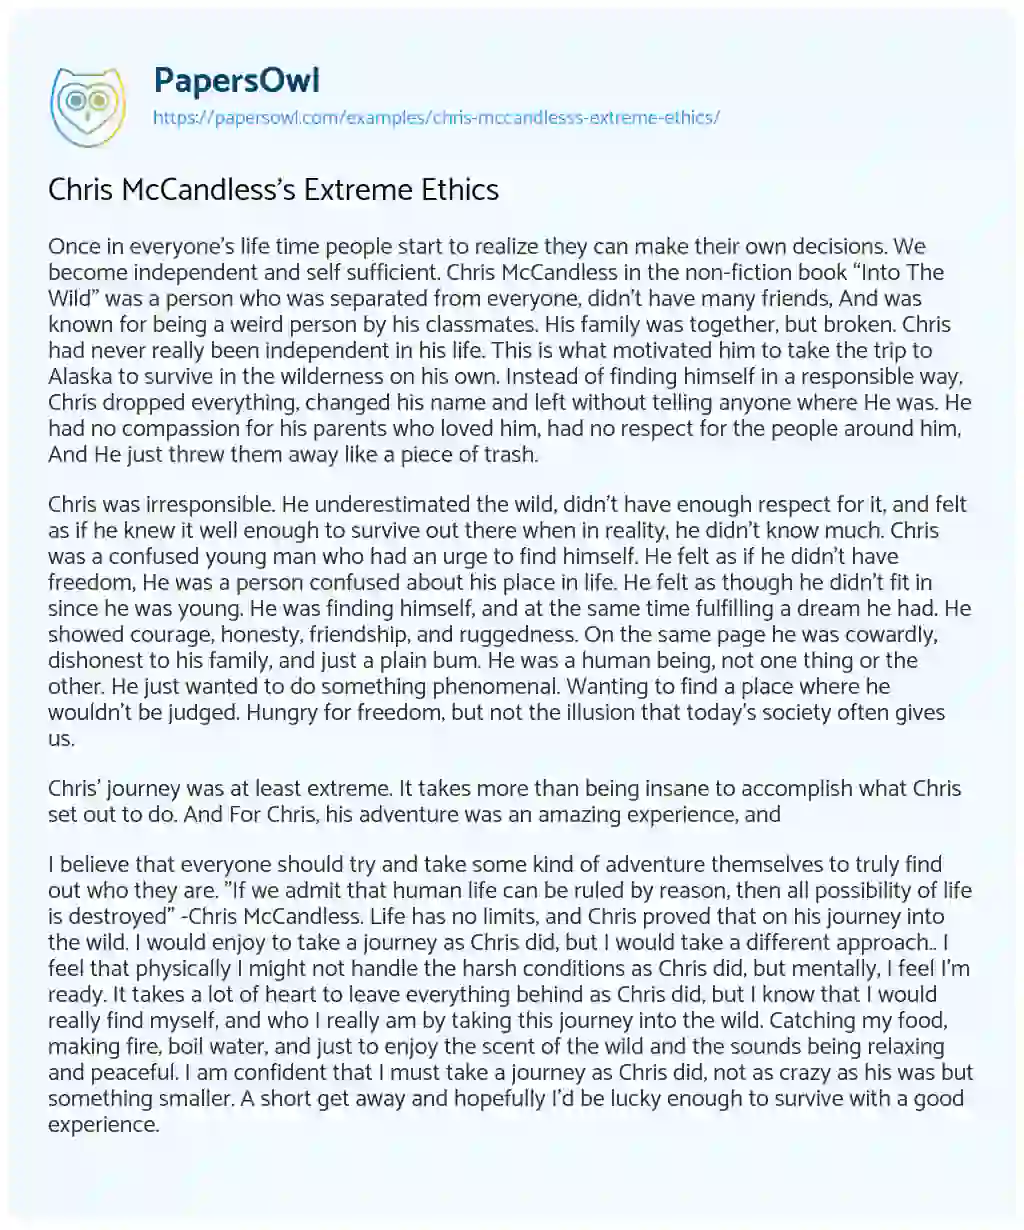 Essay on Chris McCandless’s Extreme Ethics